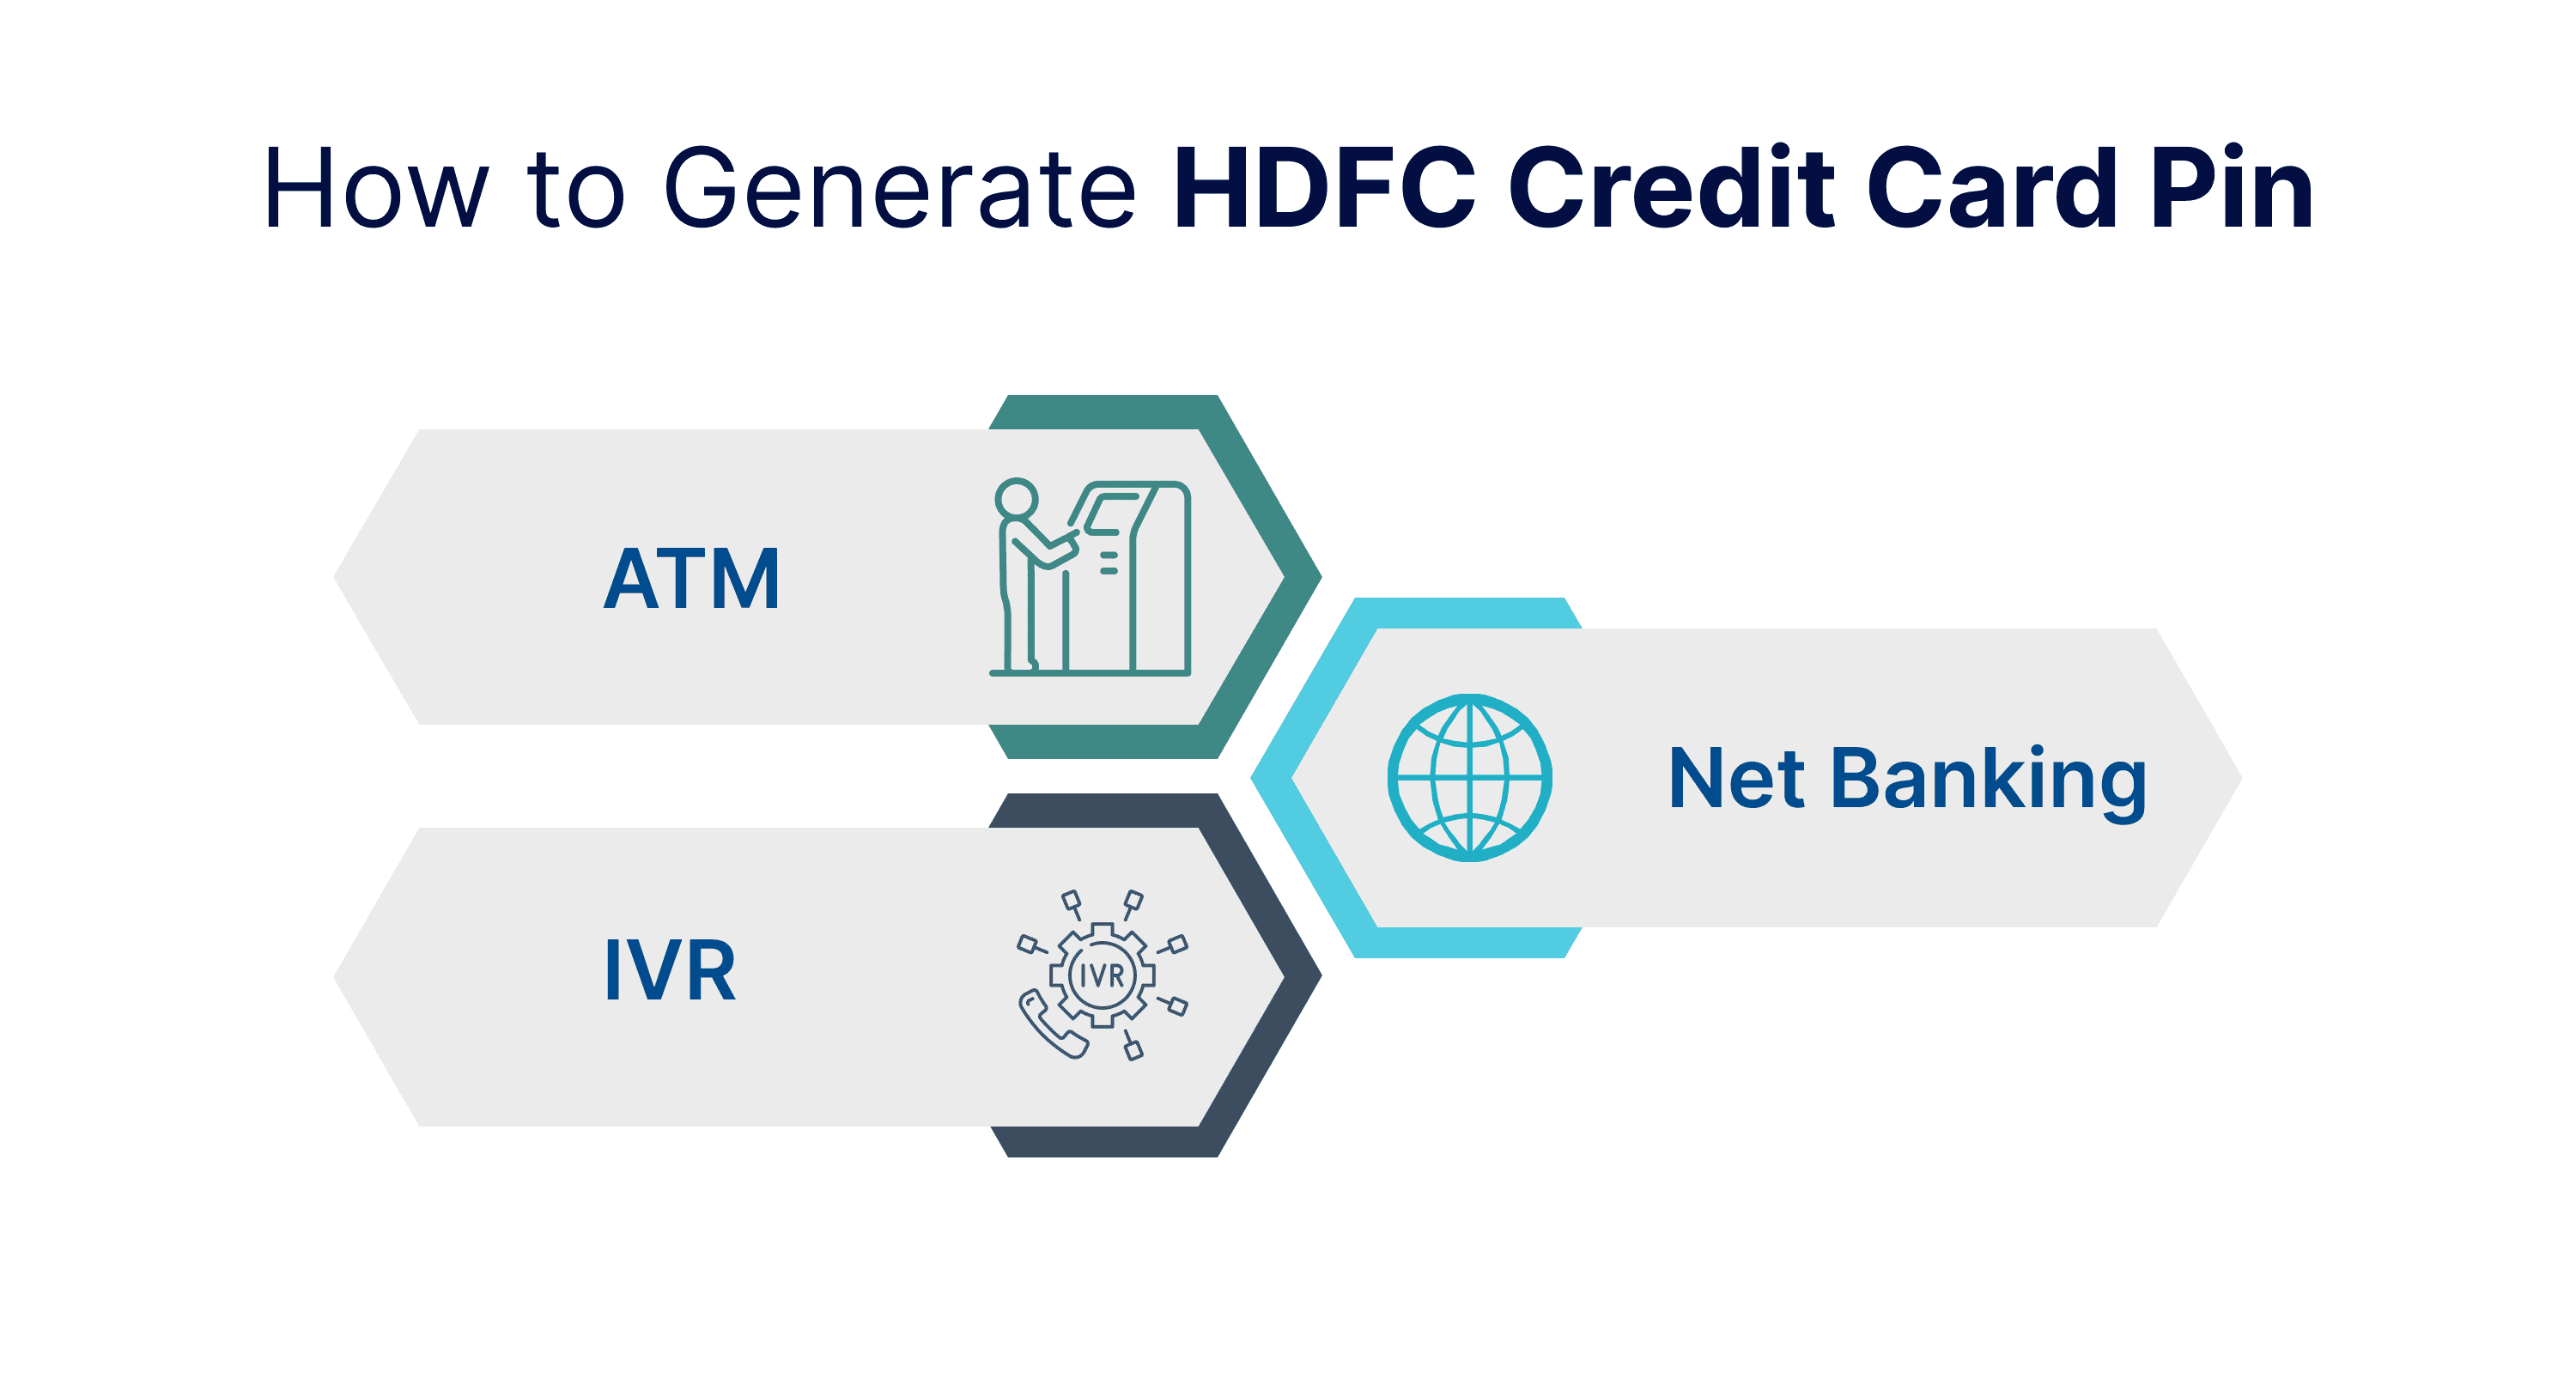 HDFC Credit Card PIN Generation